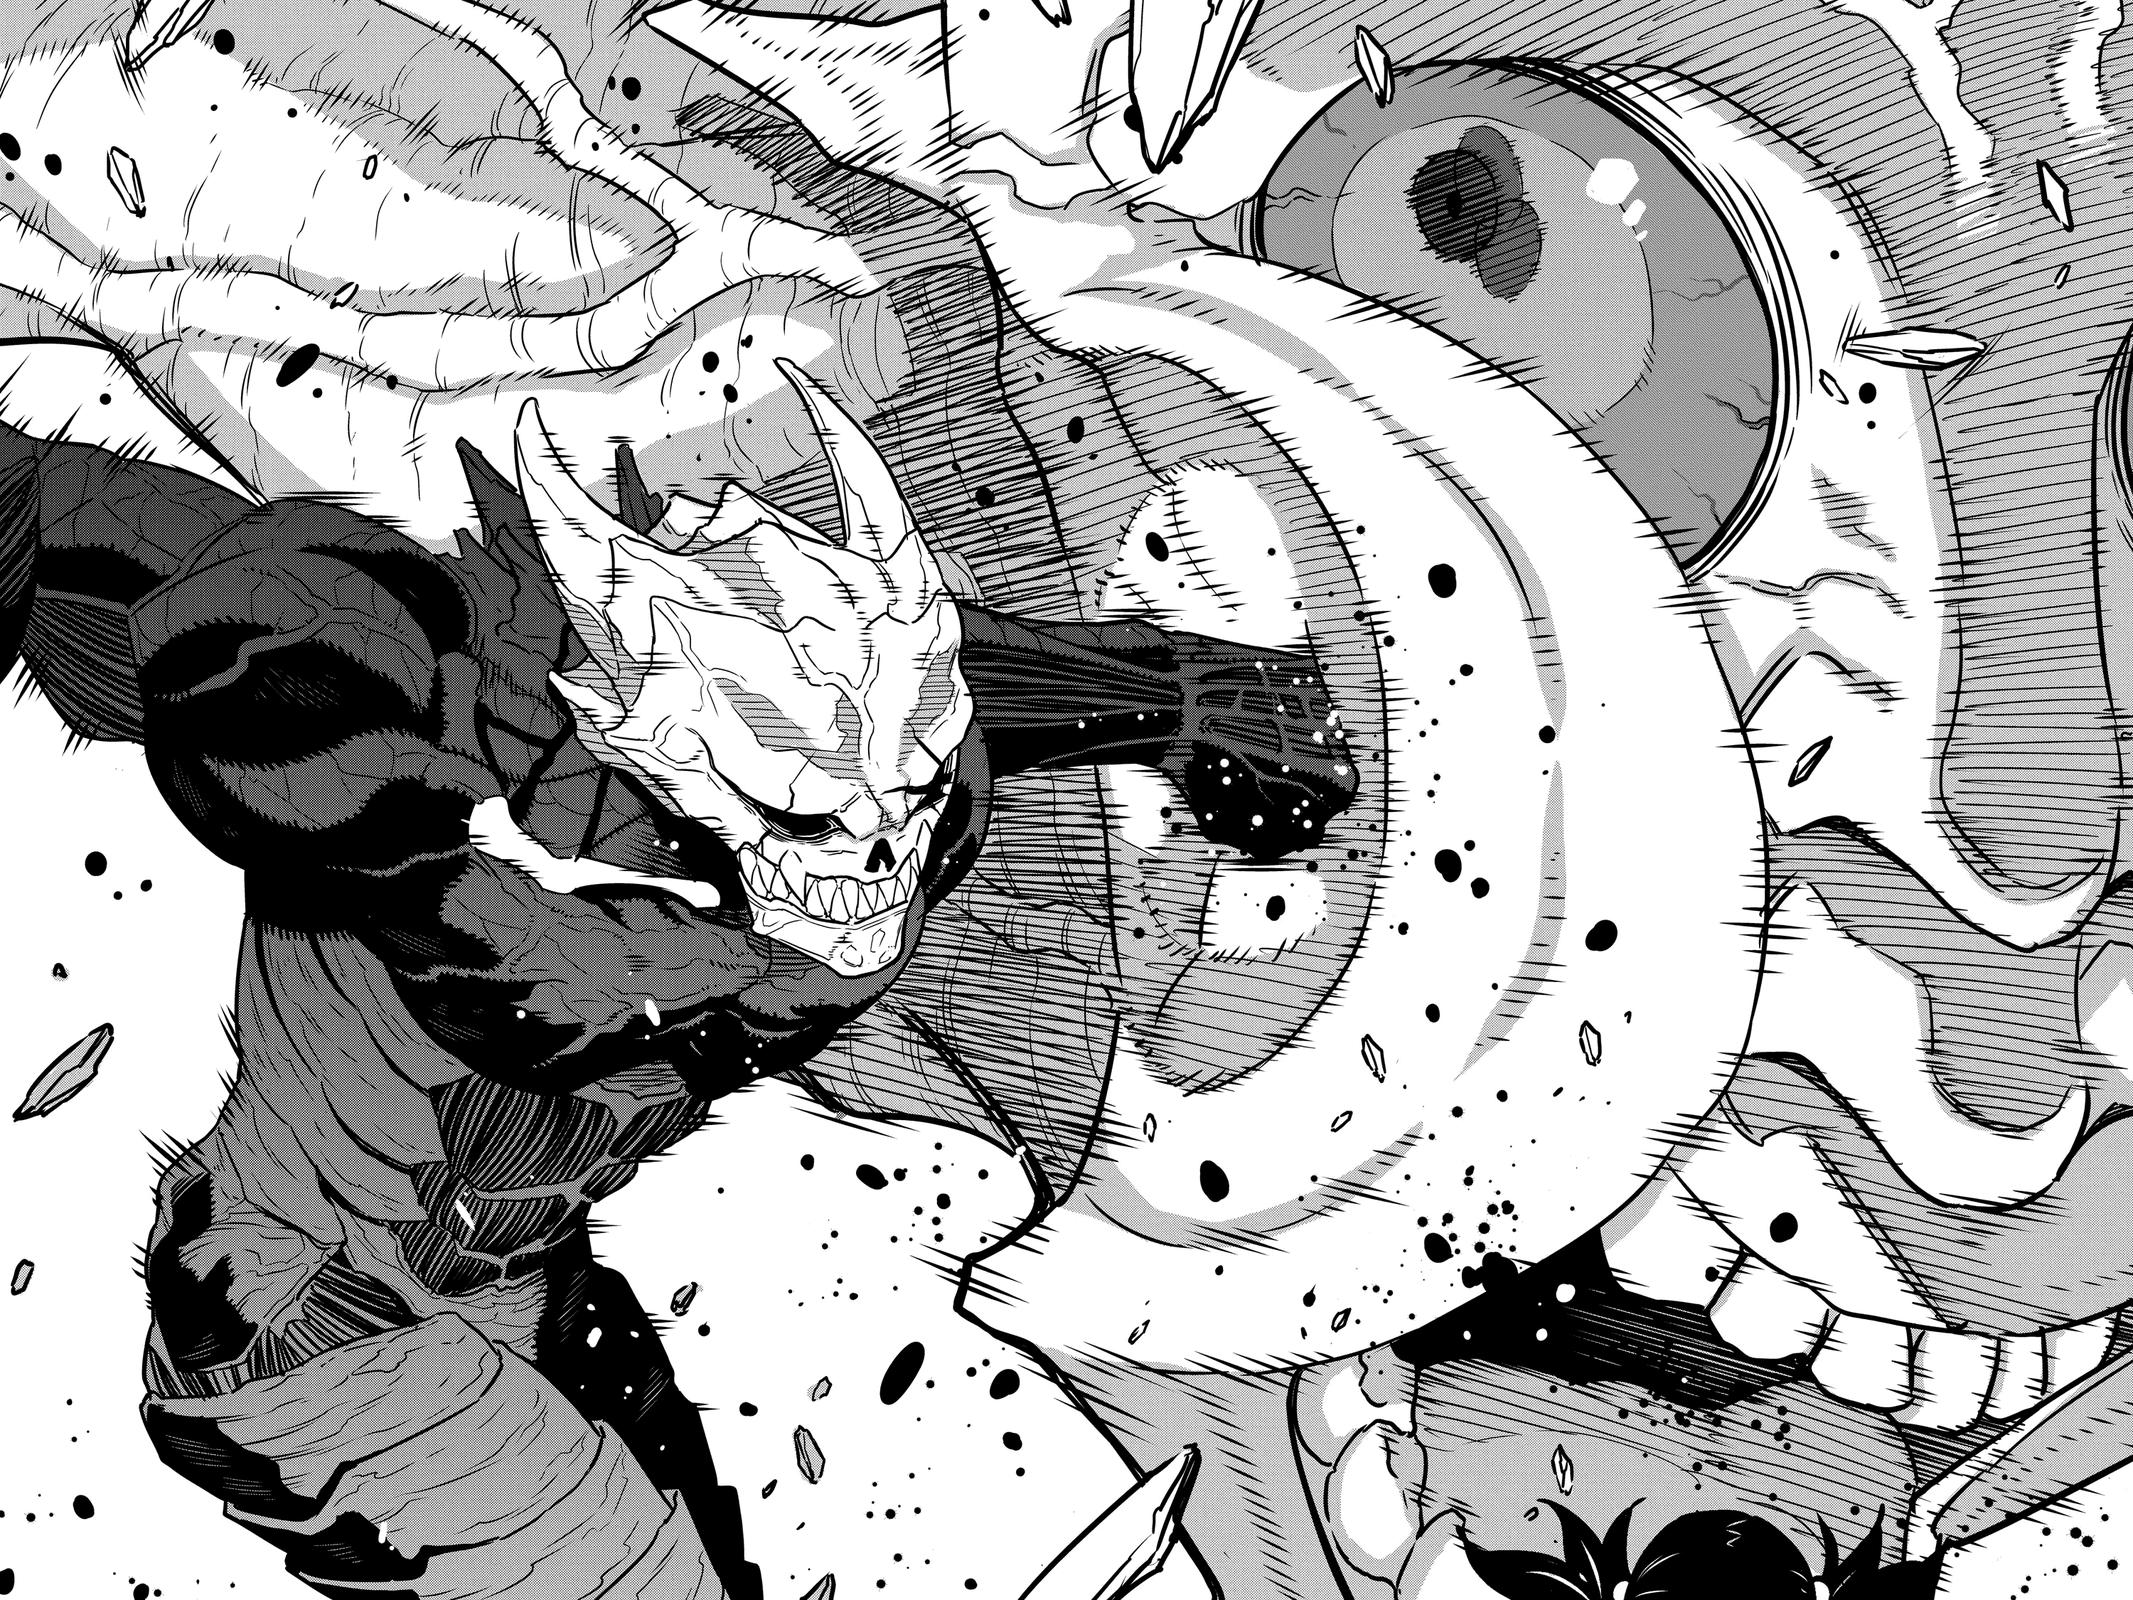 Kafka Hibeno slugs it out in Kaiju #8 Chapter 2 (2020) Shueisha. Words and art by Naoya Matsumoto